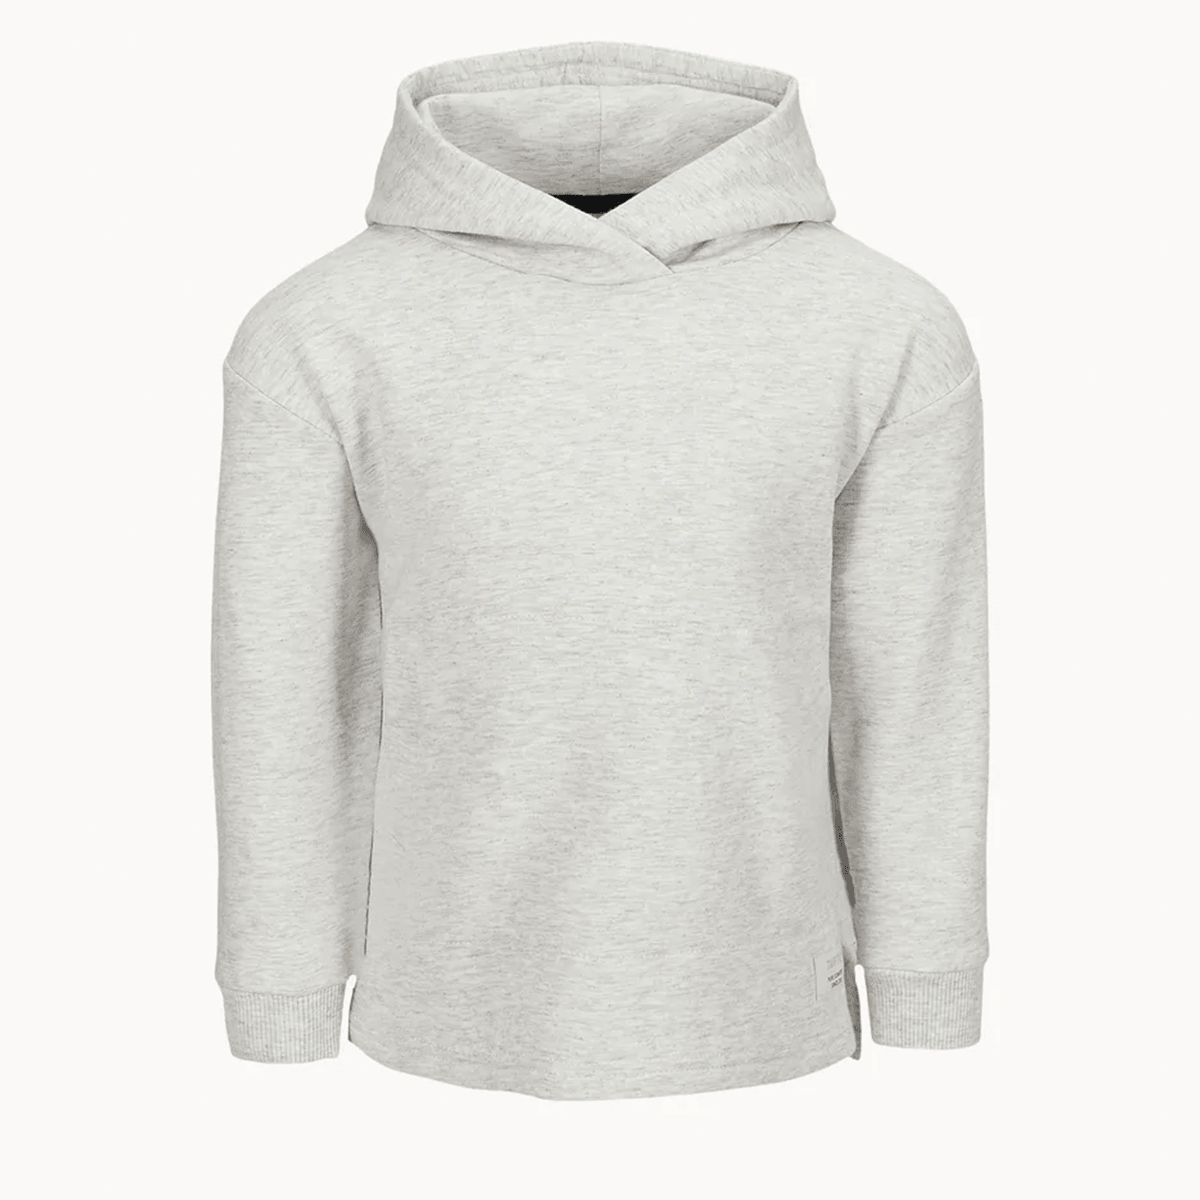 Puffin Hoodie Sweater (UB) - pikkorisport